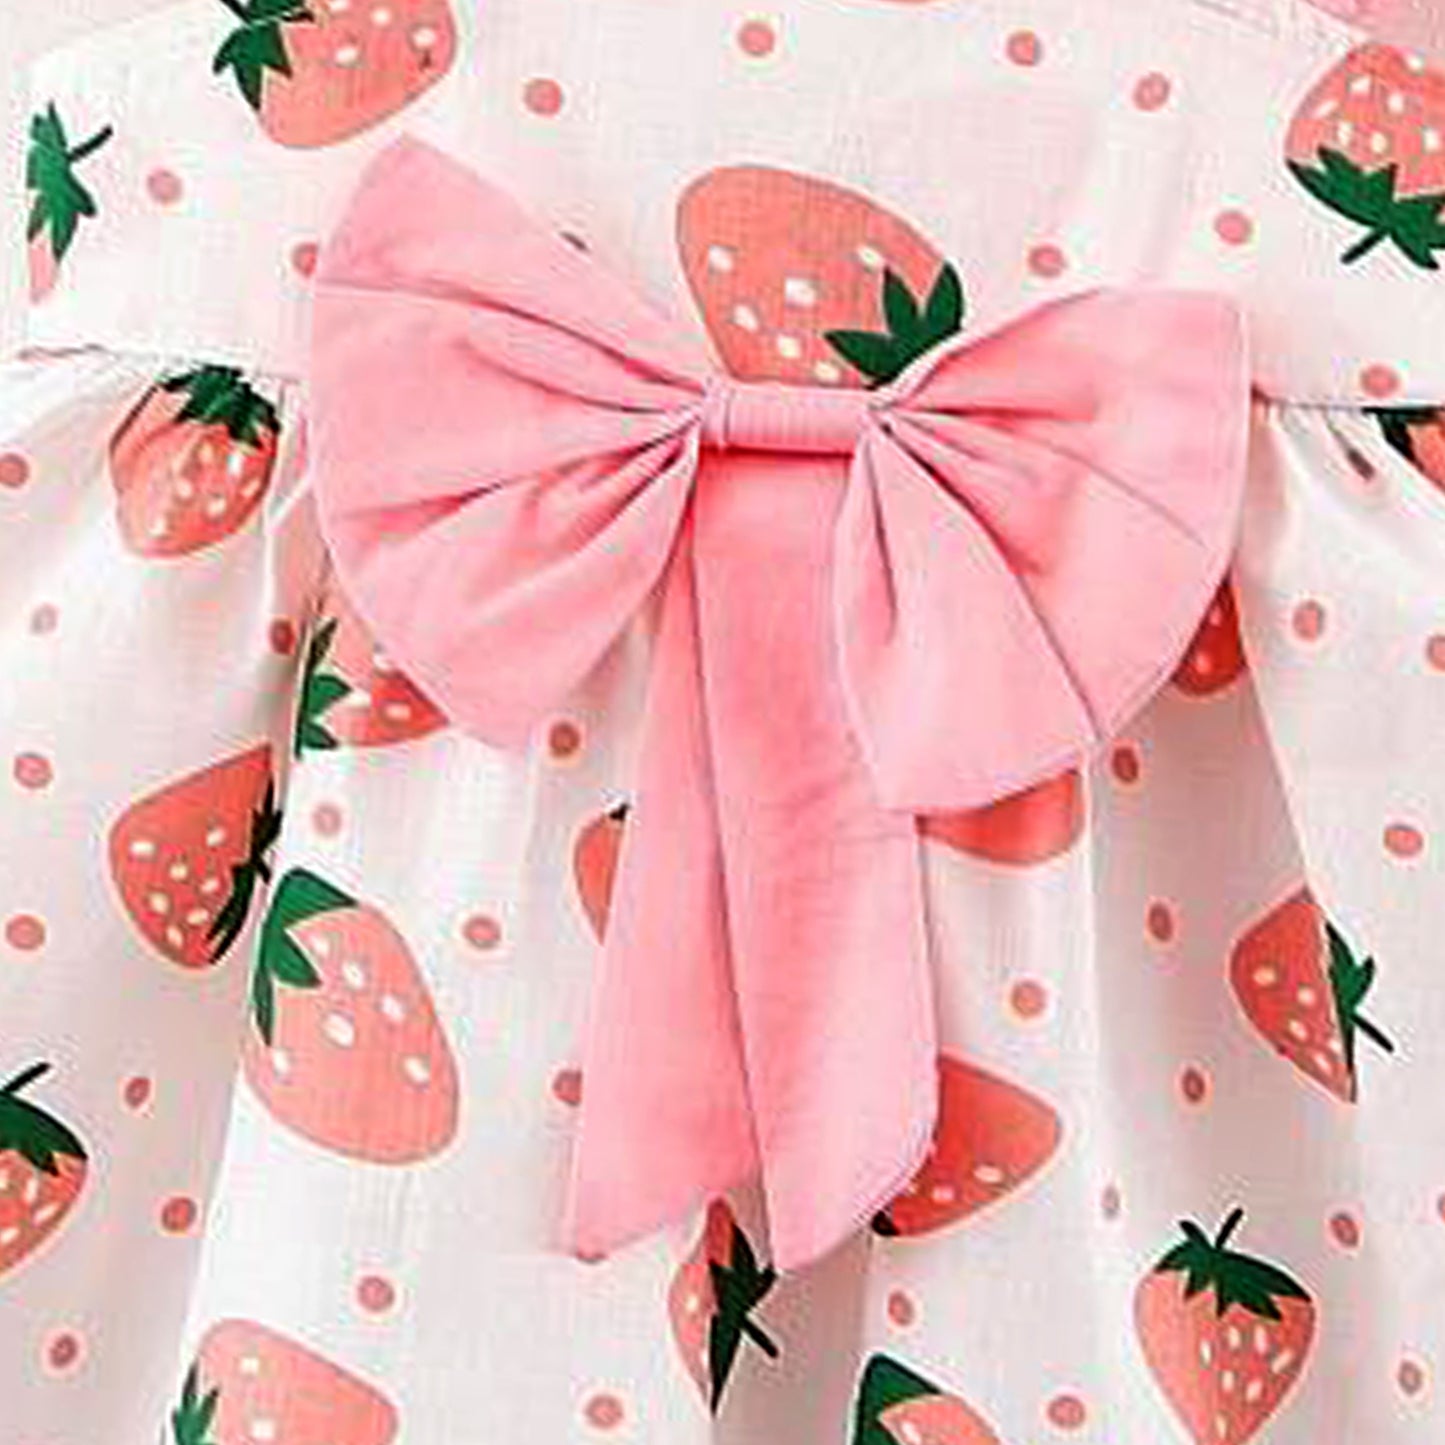 BabyGirl's Pink Strawberry Stylish Strips Design Midi Frock Dress for Kids.